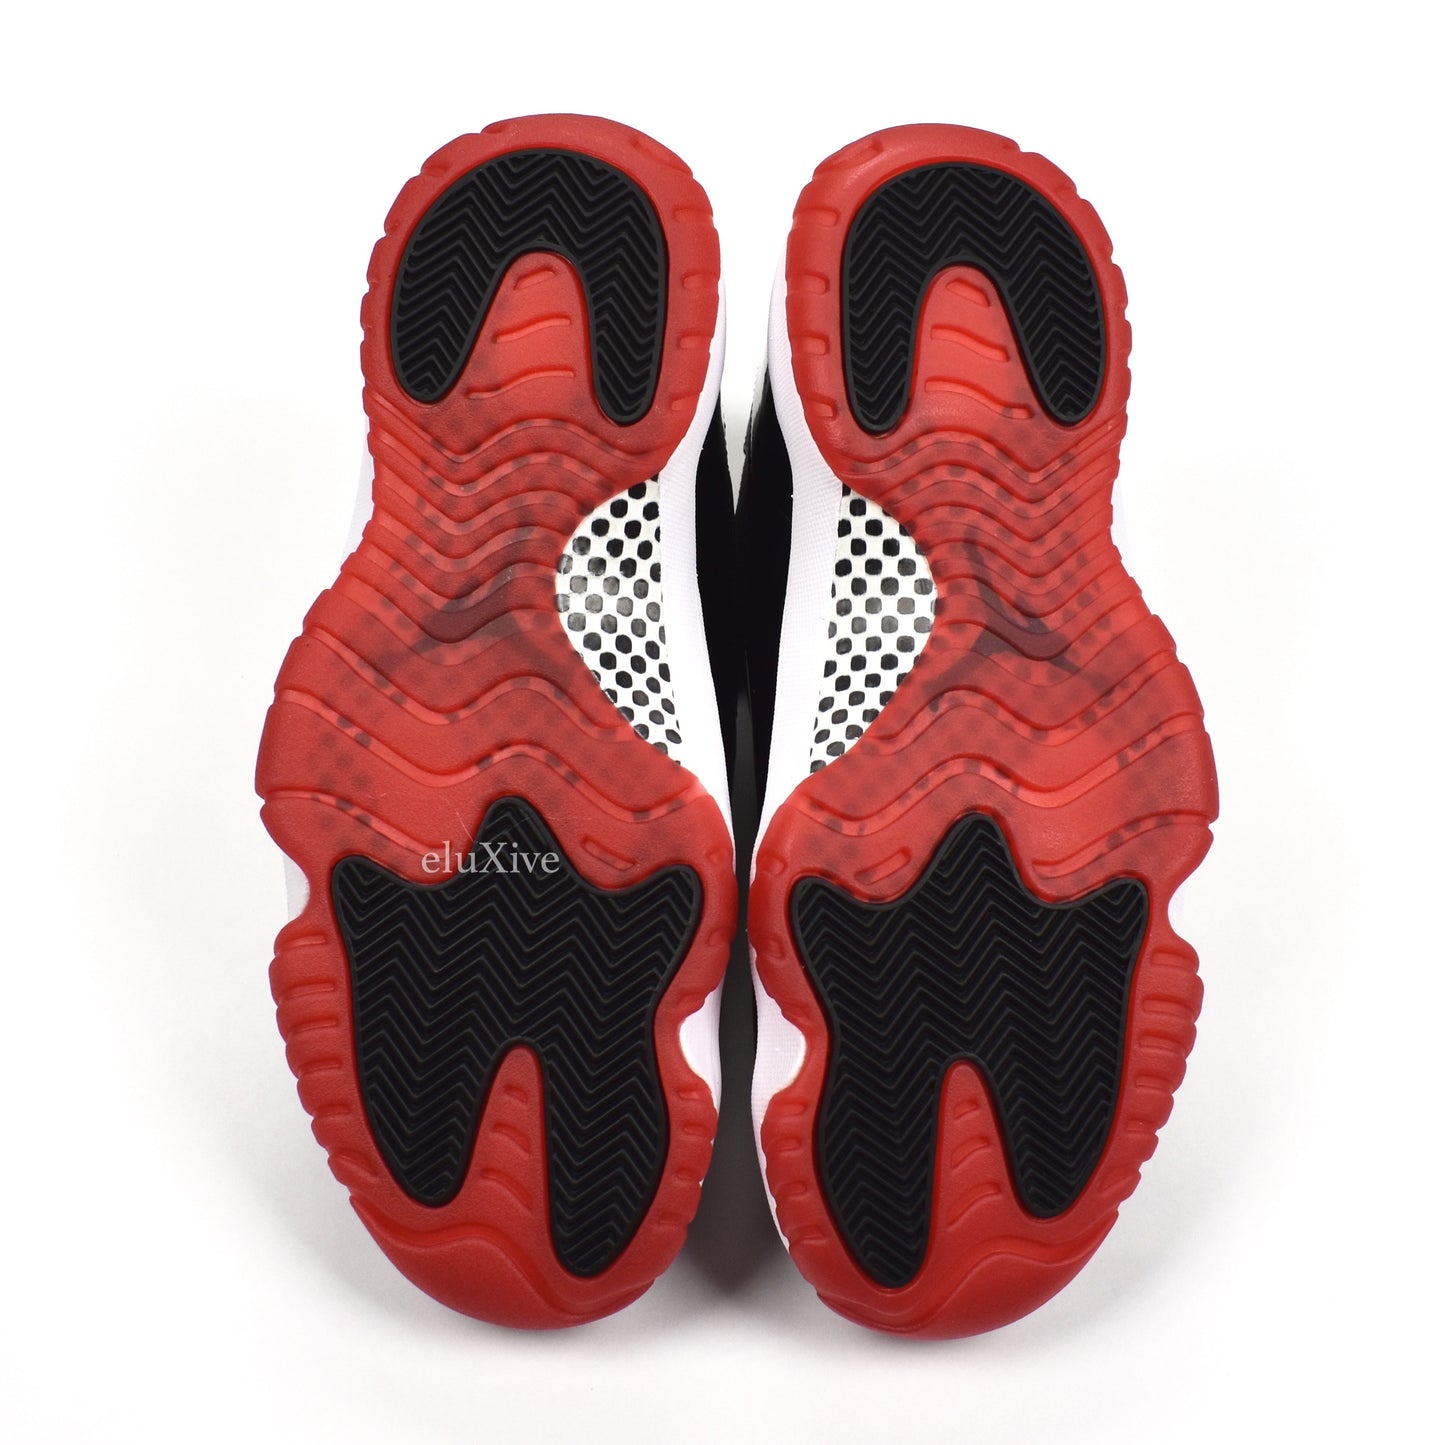 Nike - Air Jordan 11 Retro 'Bred'